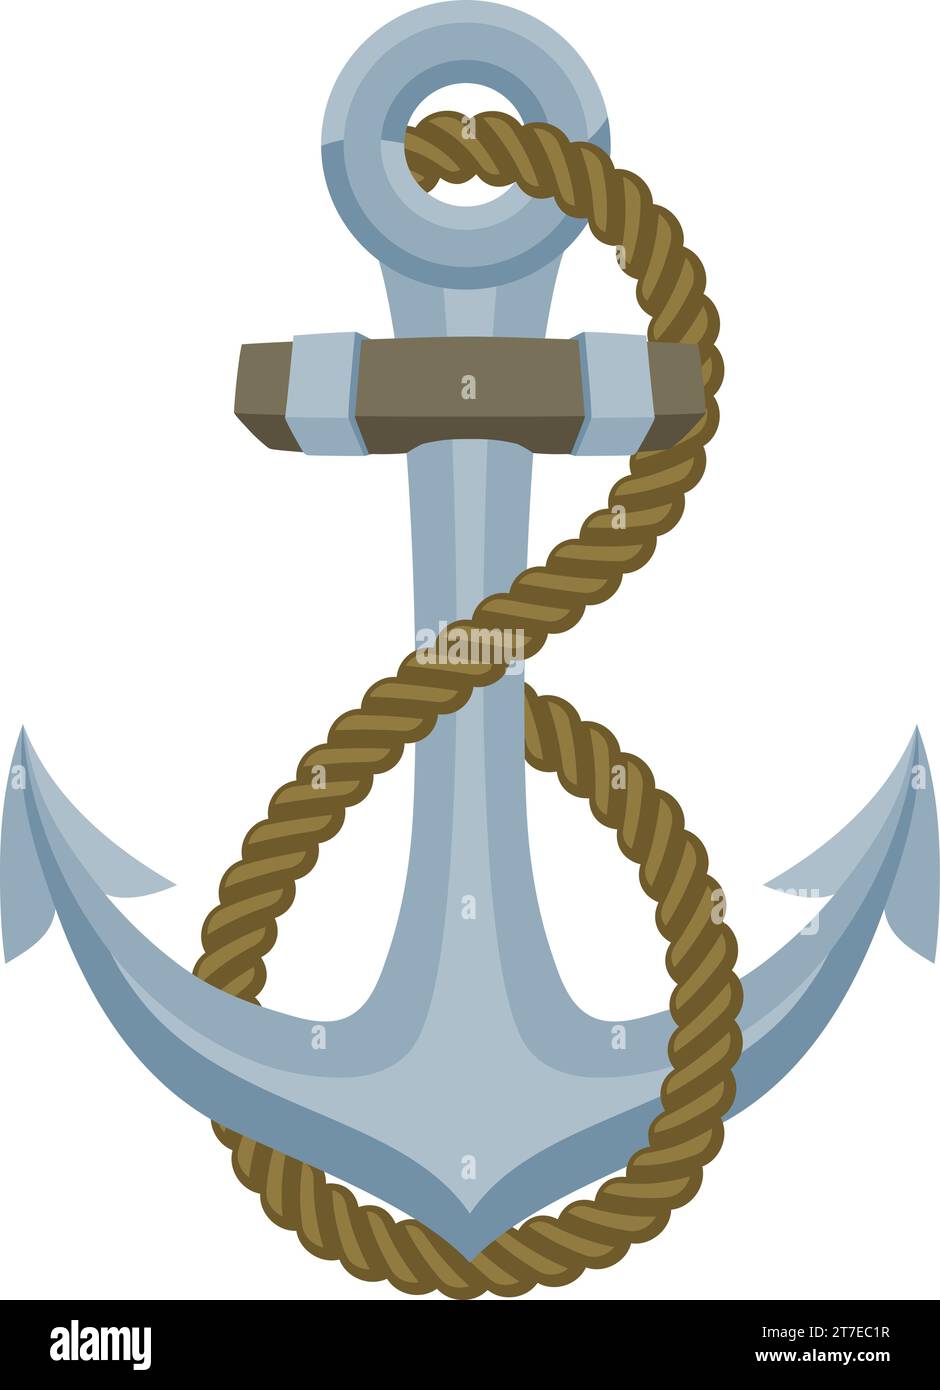 https://c8.alamy.com/comp/2T7EC1R/ship-anchor-boat-rope-nautical-illustration-2T7EC1R.jpg